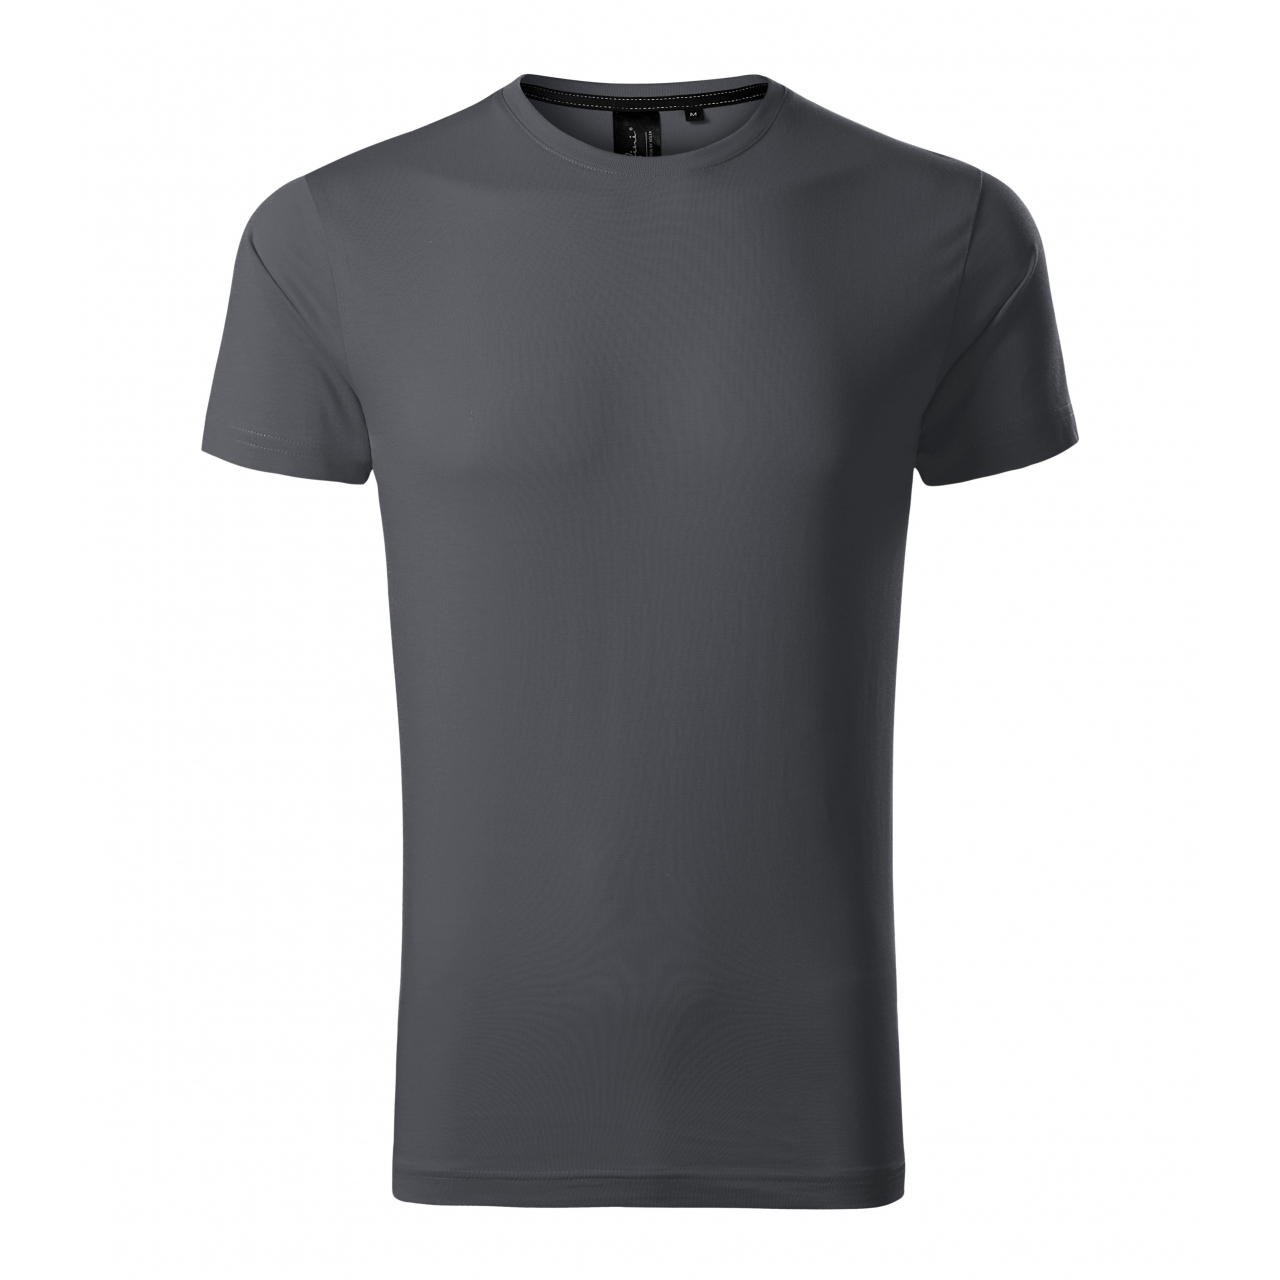 Tričko pánské Malfini Exclusive - tmavě šedé, XL